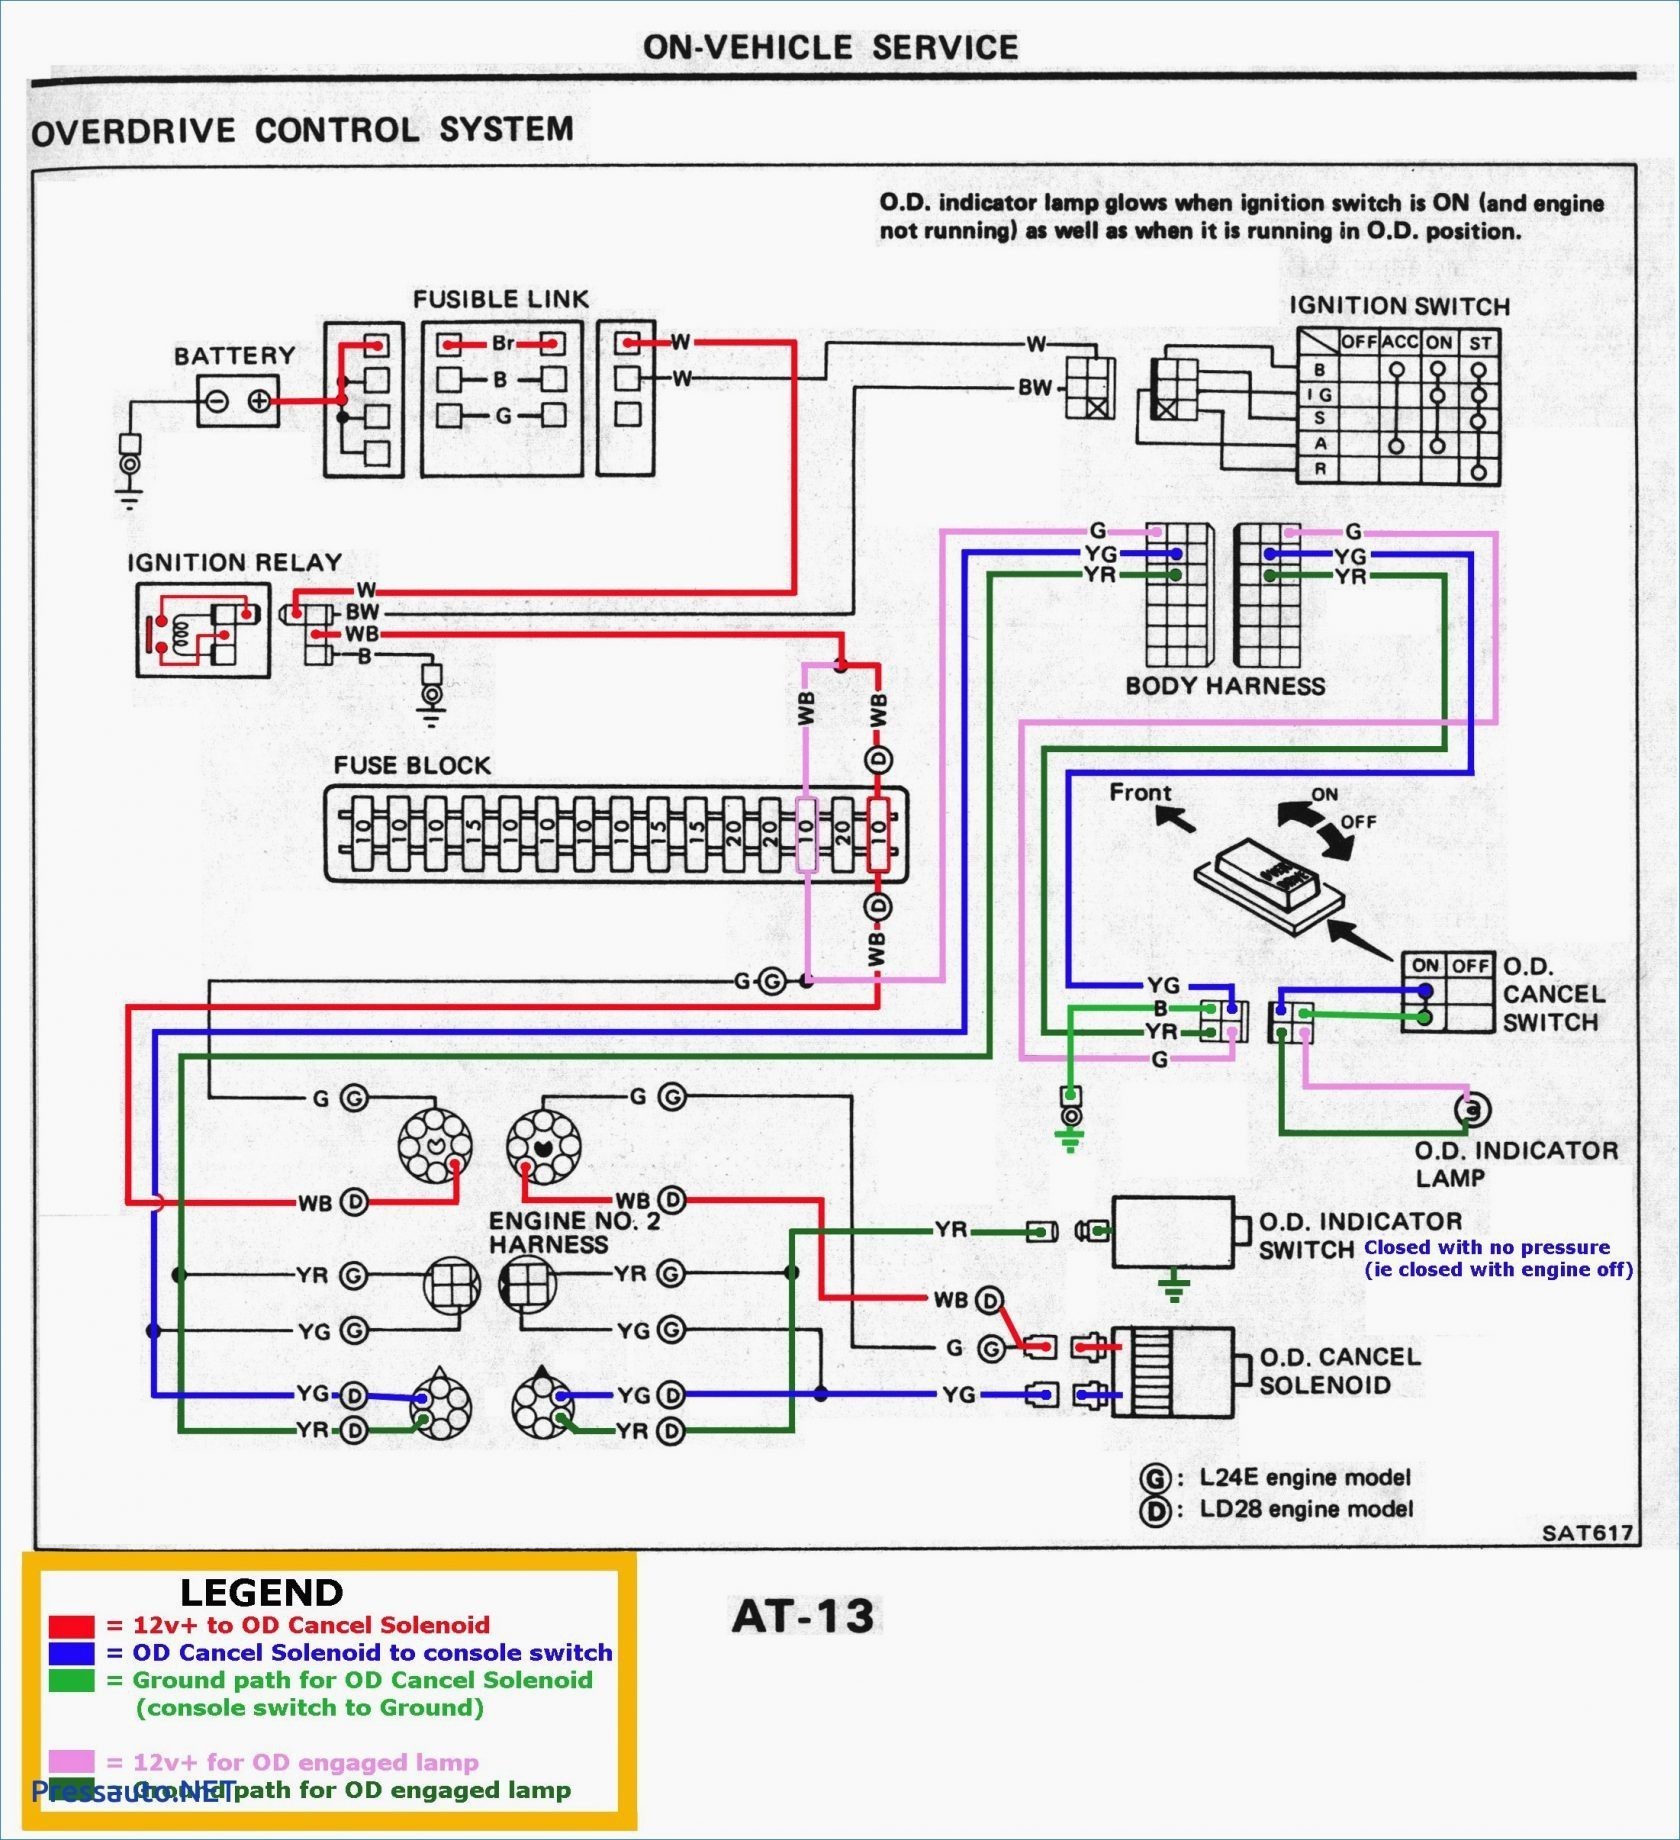 Car Parts Diagram Bmw X5 Parts Diagram Wiring Diagram Inside Of Car Parts Diagram